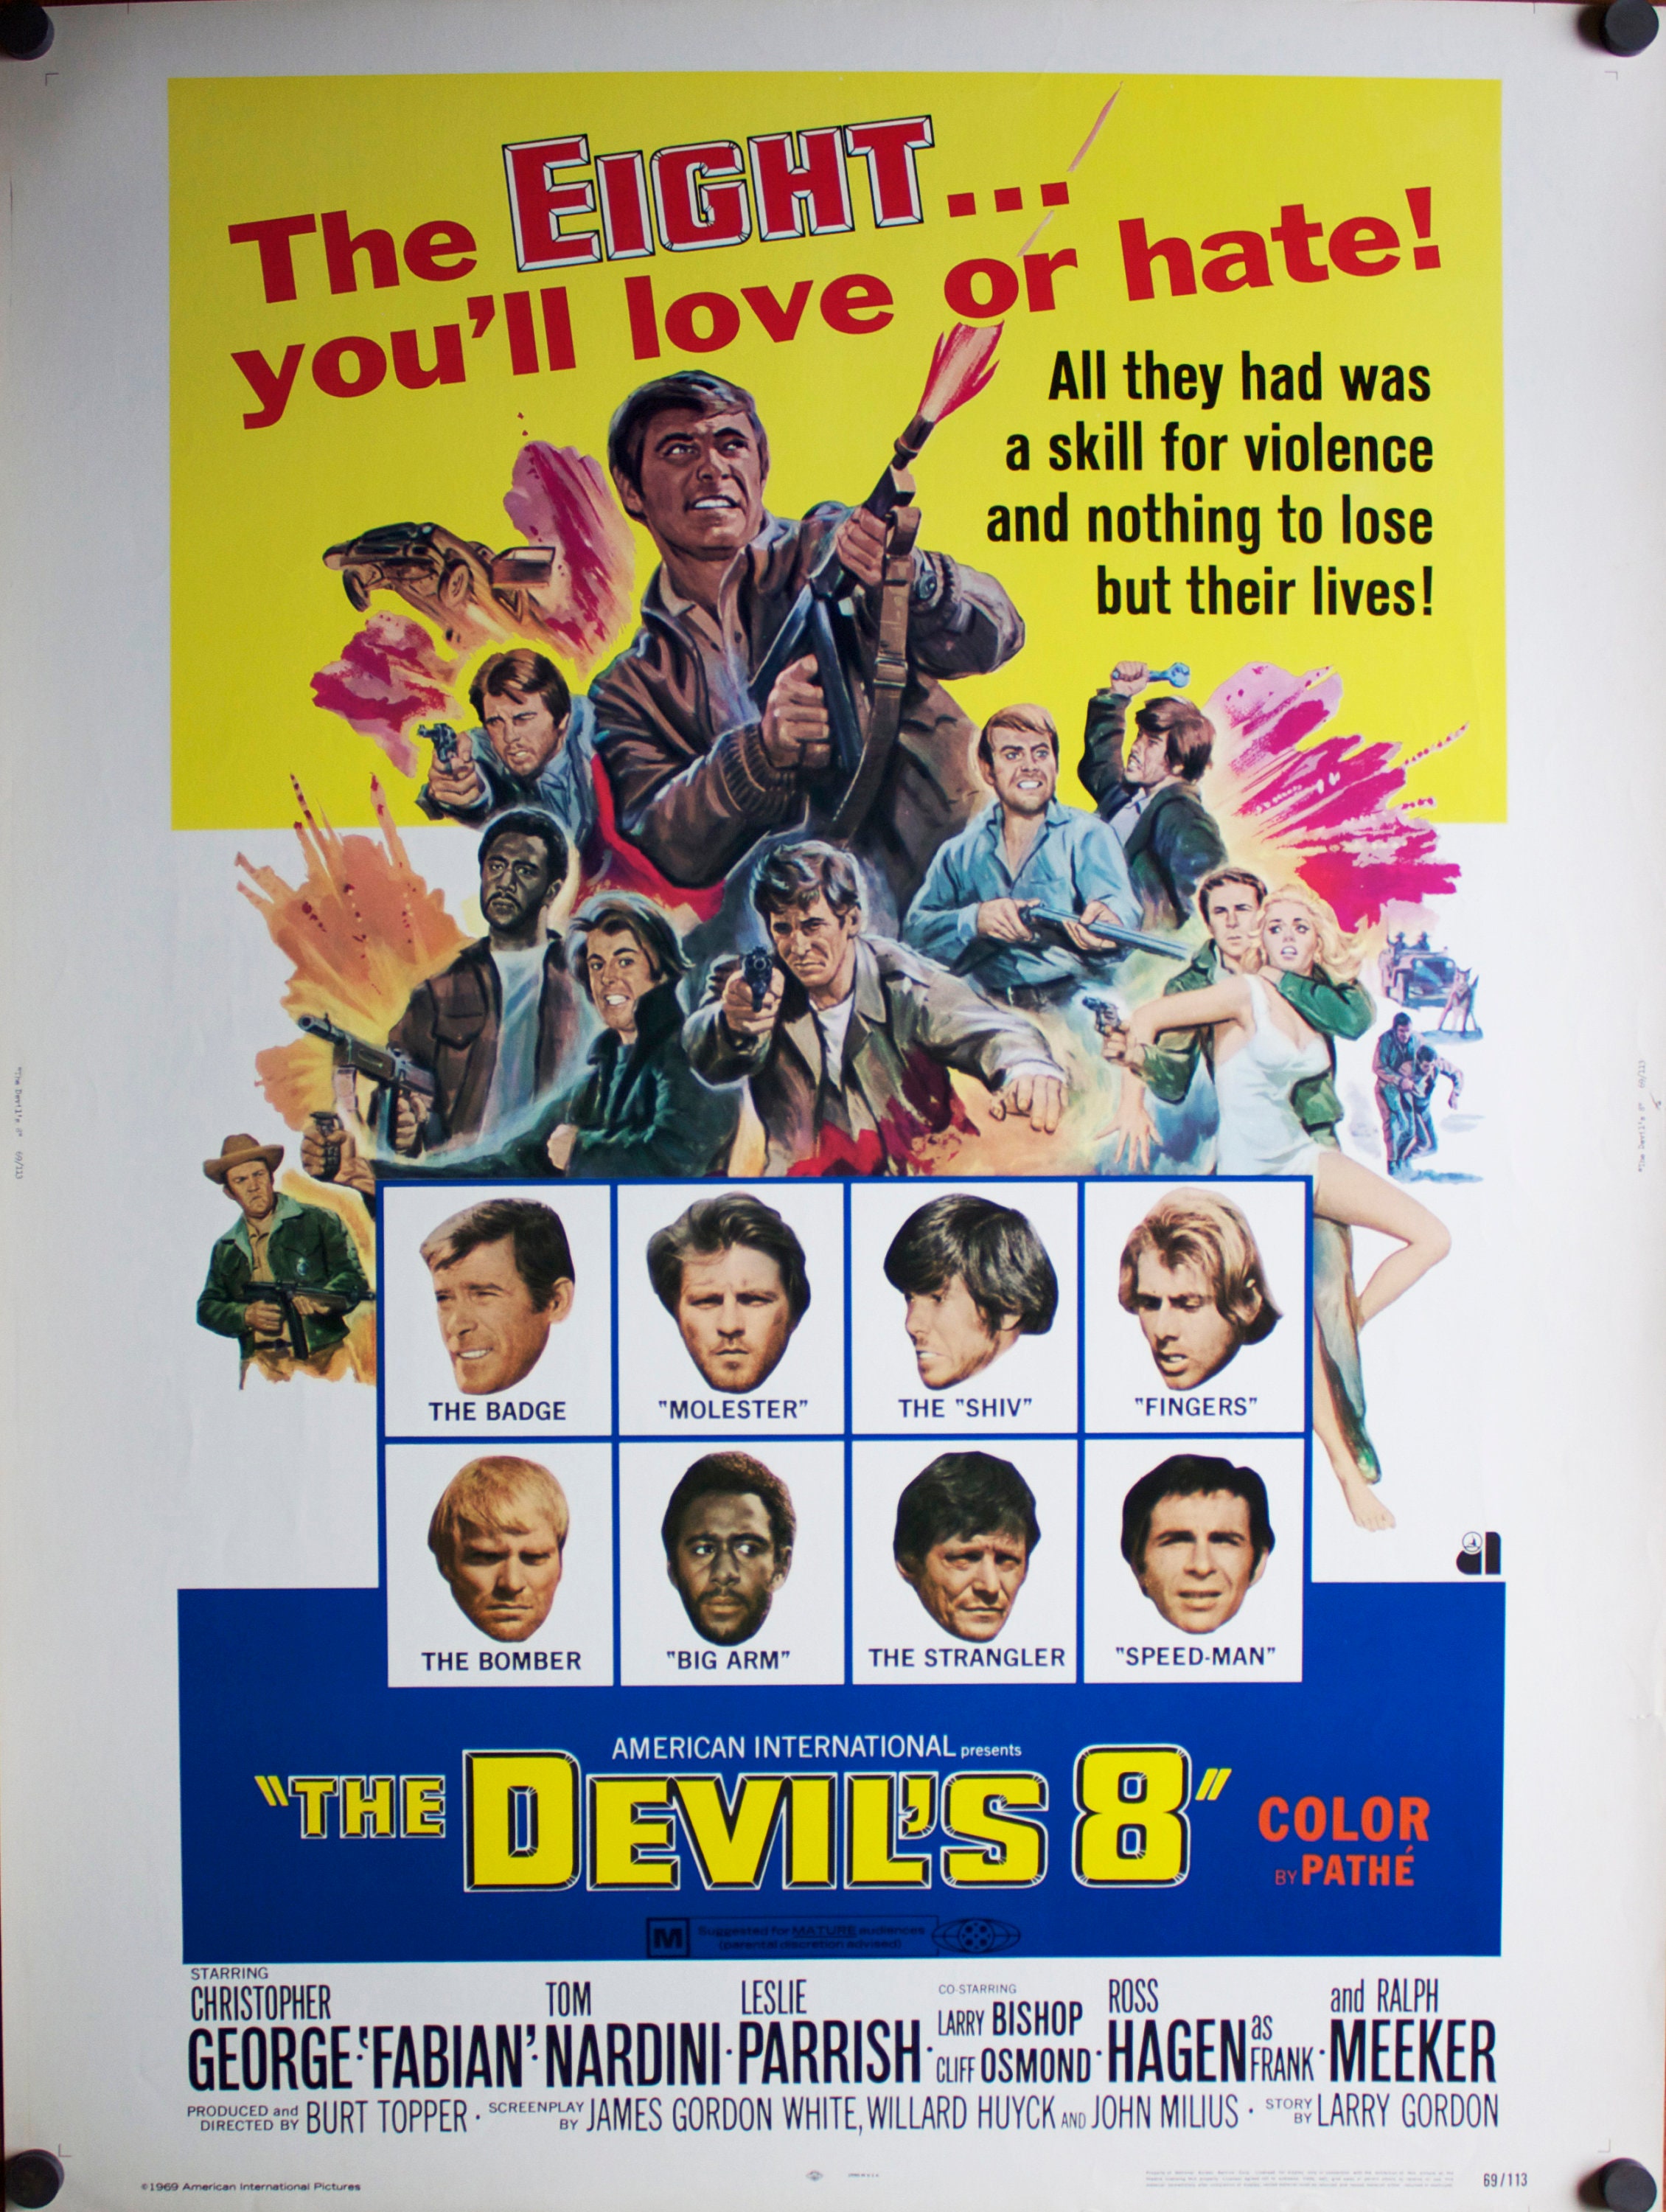 The devil's 8 (Original movie poster)